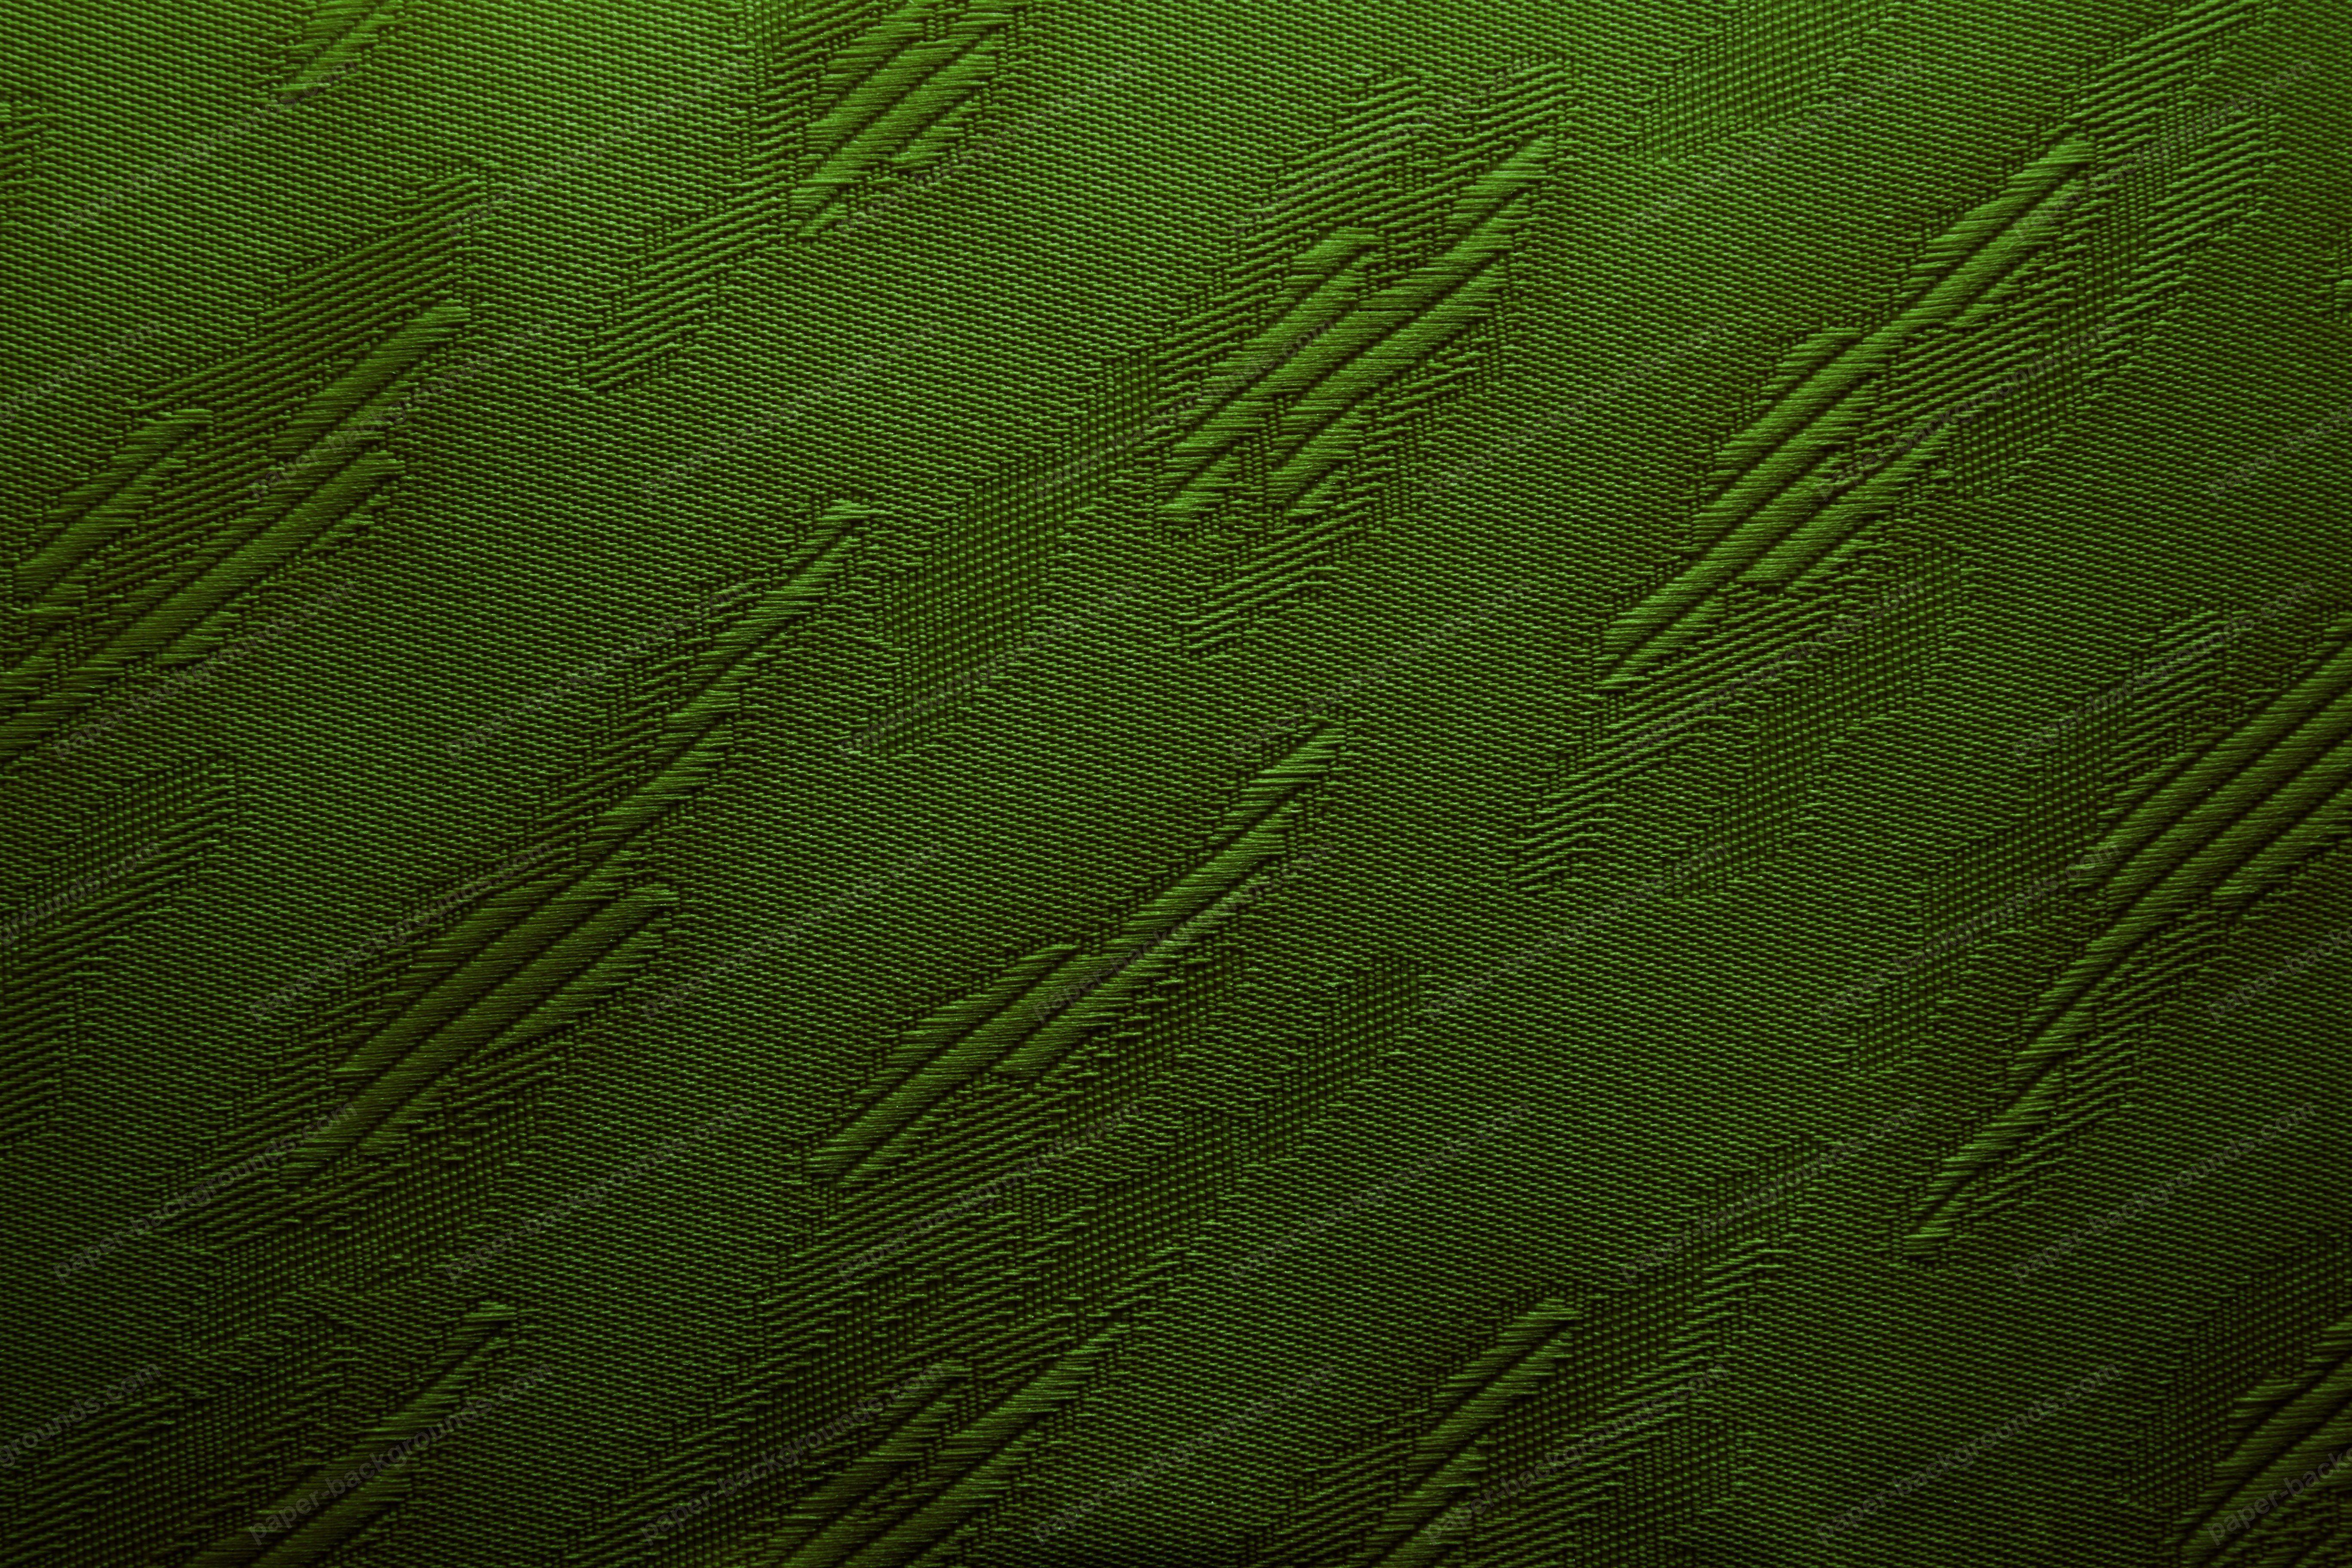 Dark Green Texture Backgrounds Wallpaper Cave